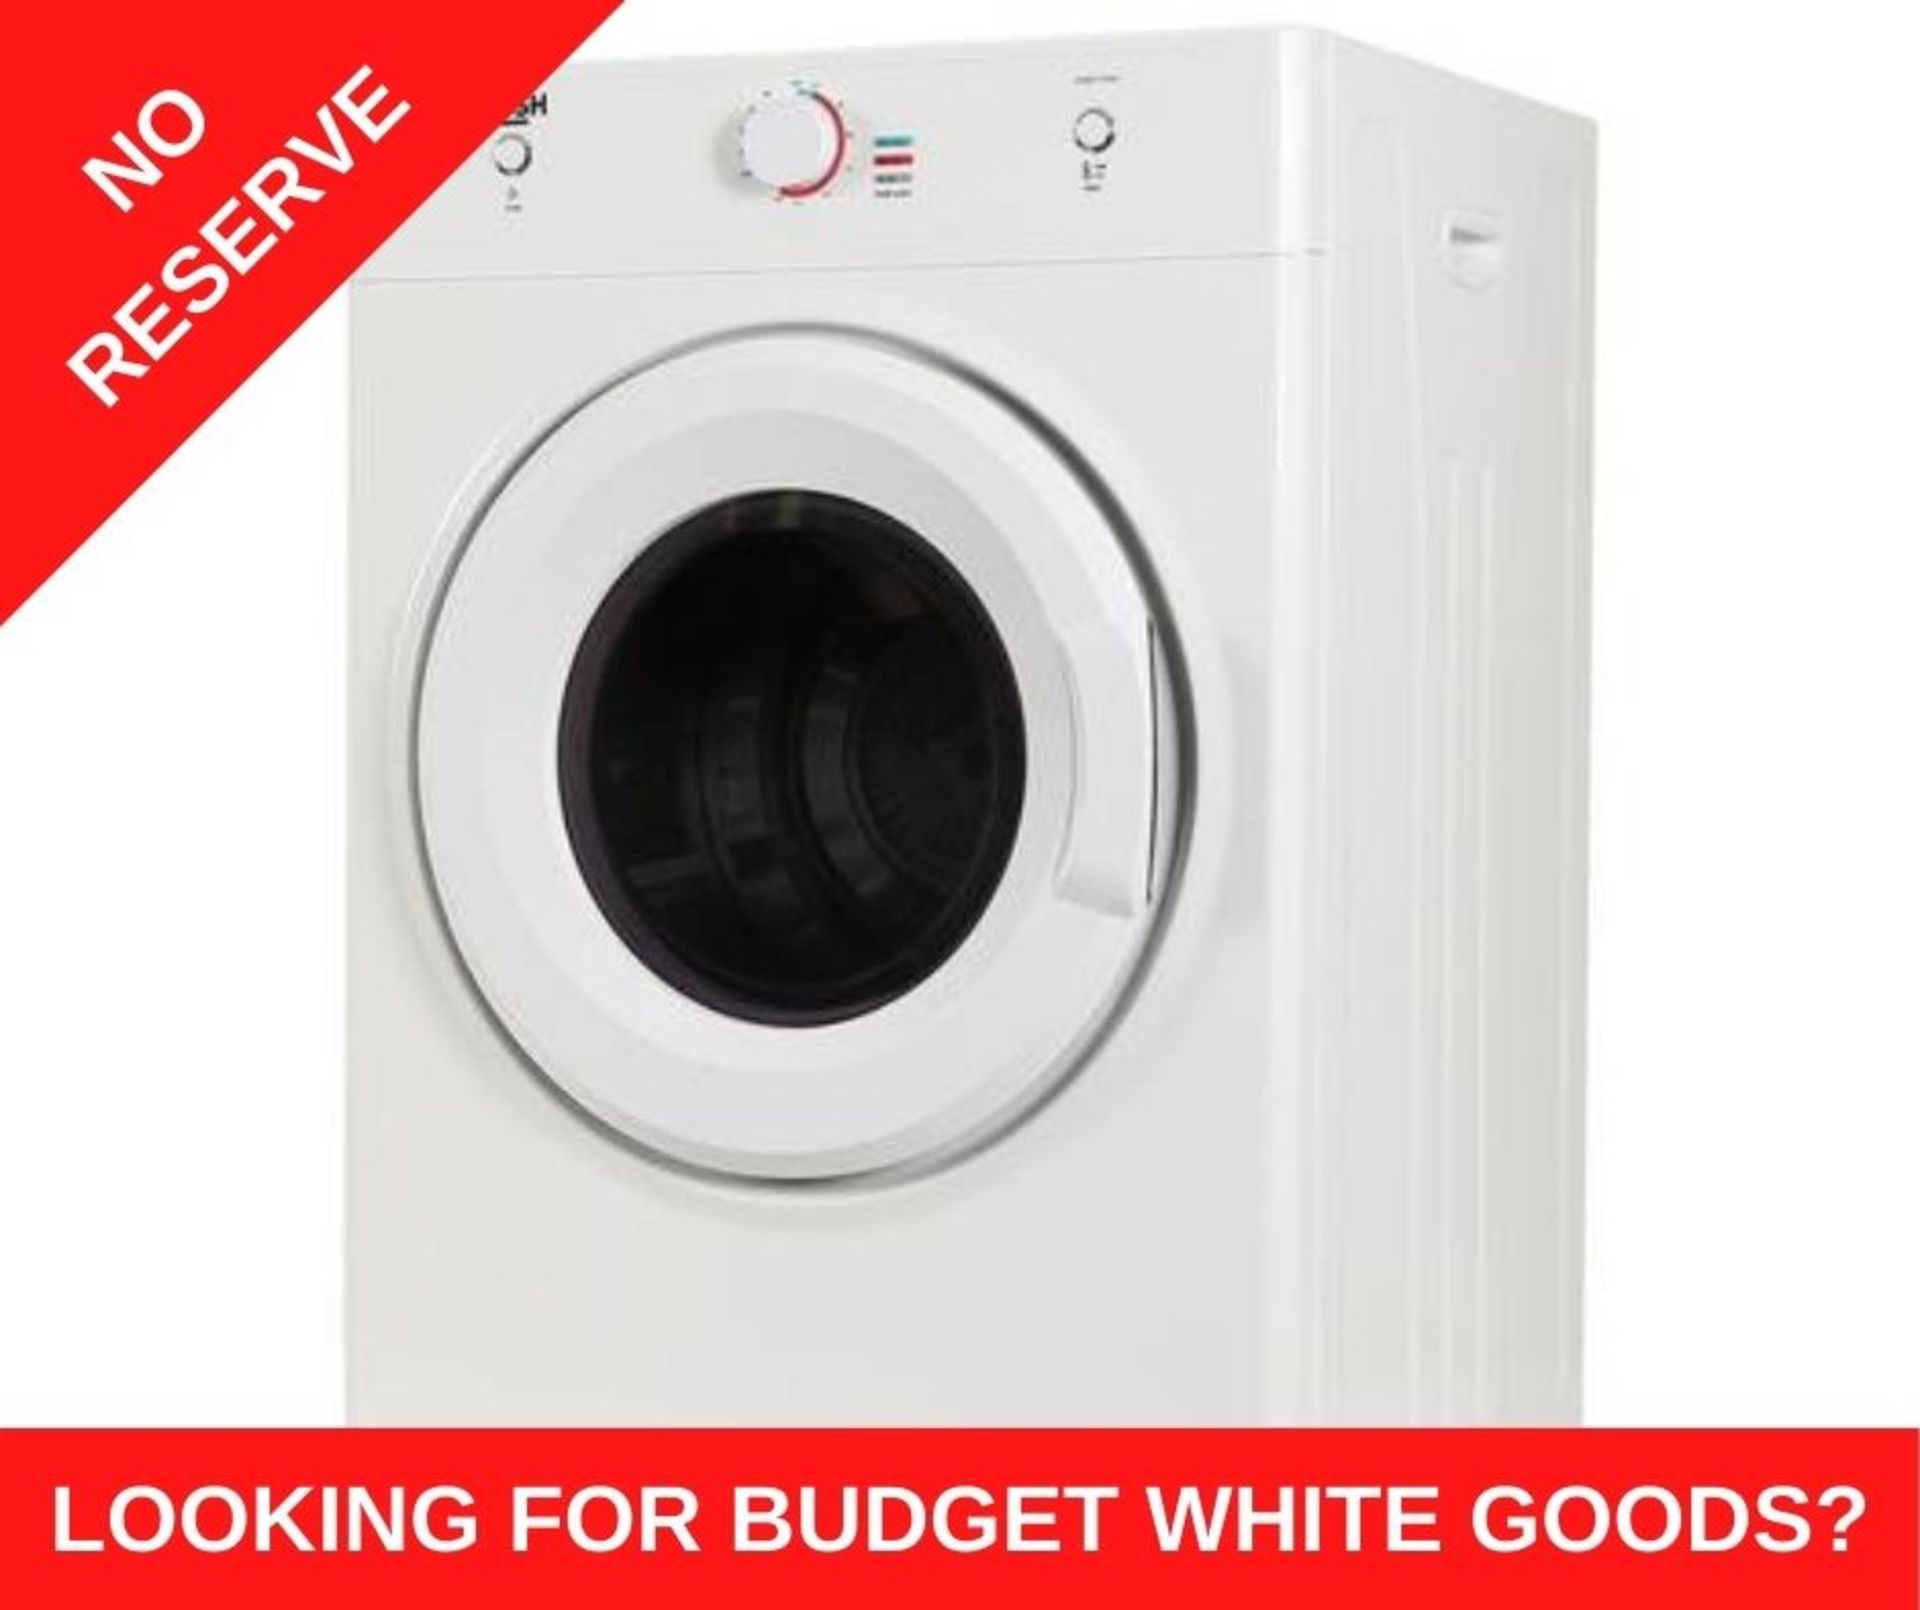 + VAT Grade A/B Bush DHB7VTDW 7Kg Vented Tumble Dryer - Capacity For Up To 35 T Shirts Making It